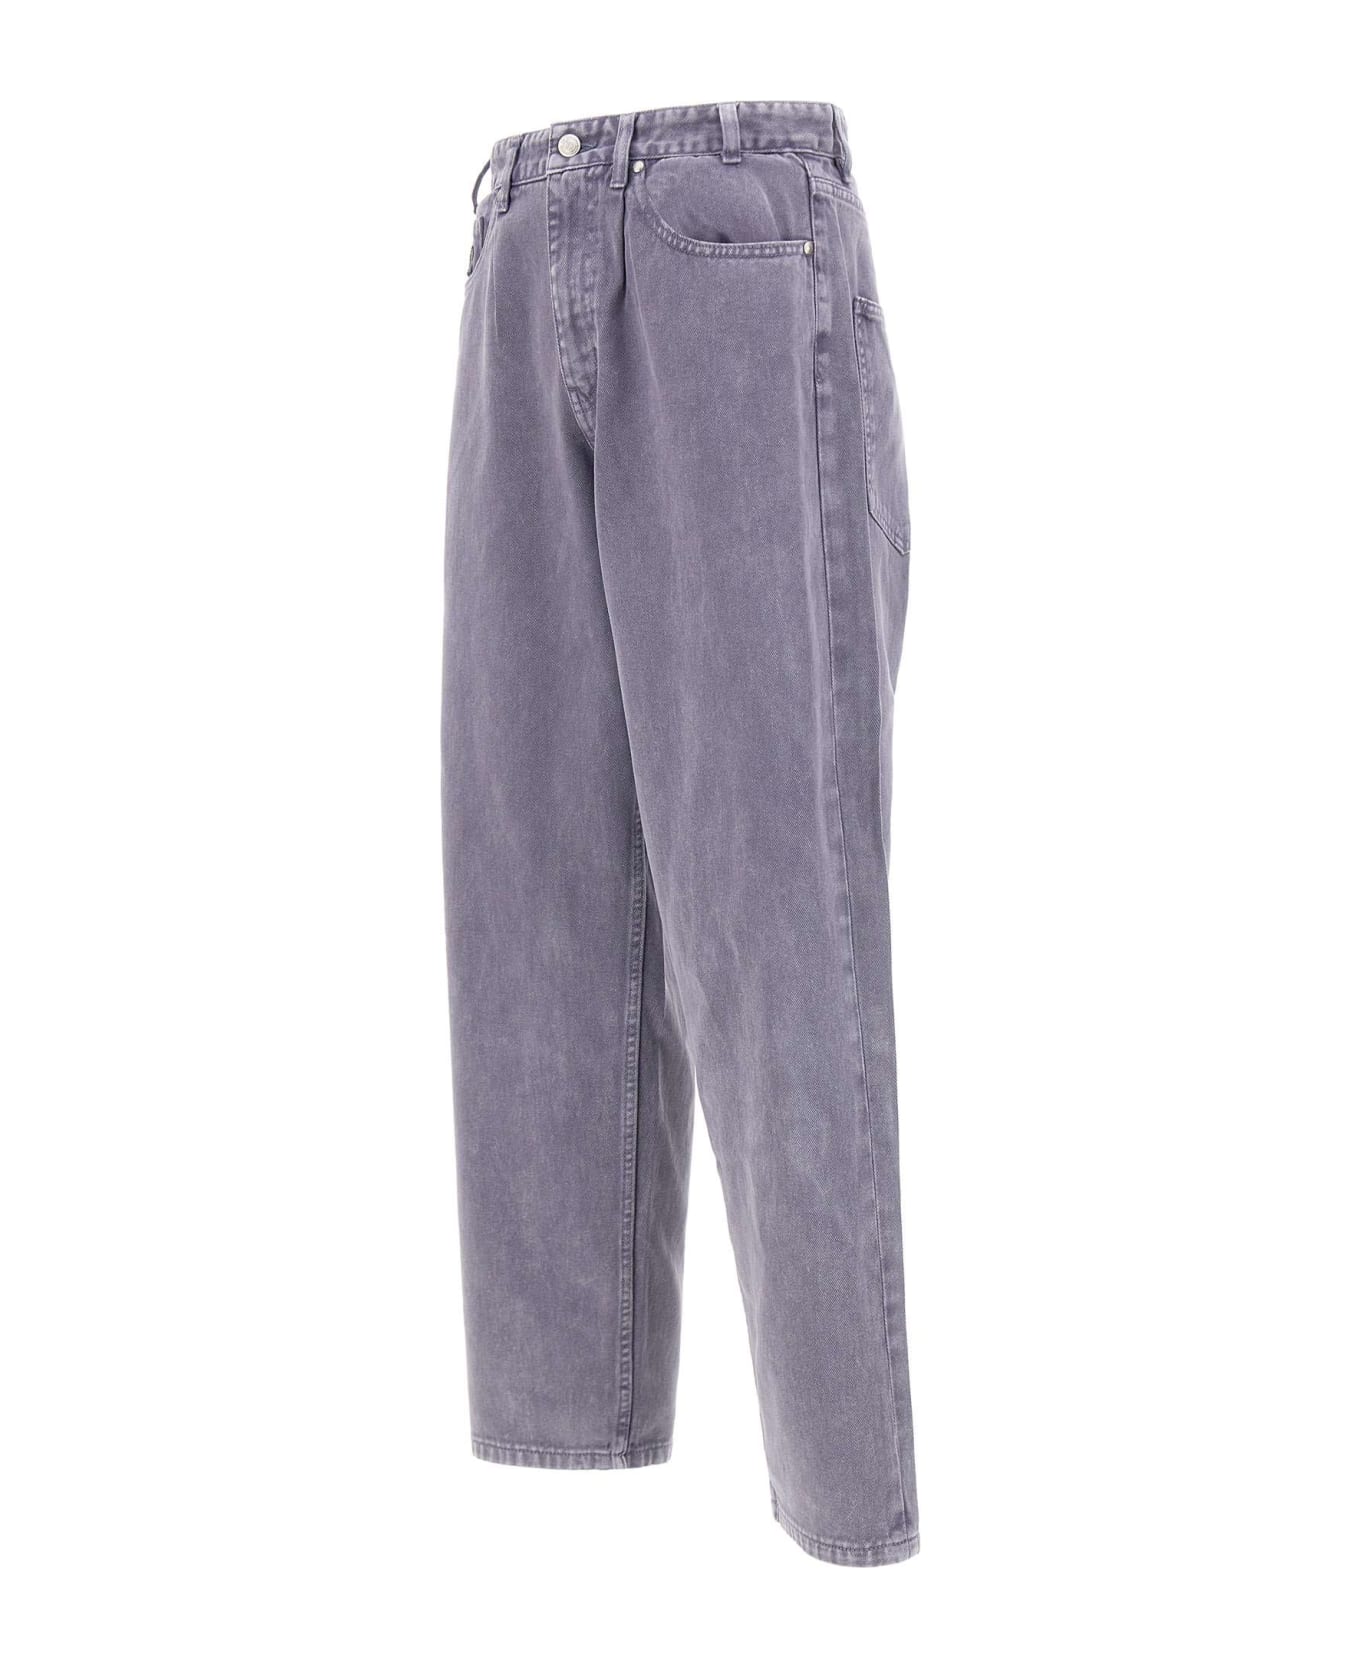 HUF 'cromer Washed Pant' Jeans - Grey デニム